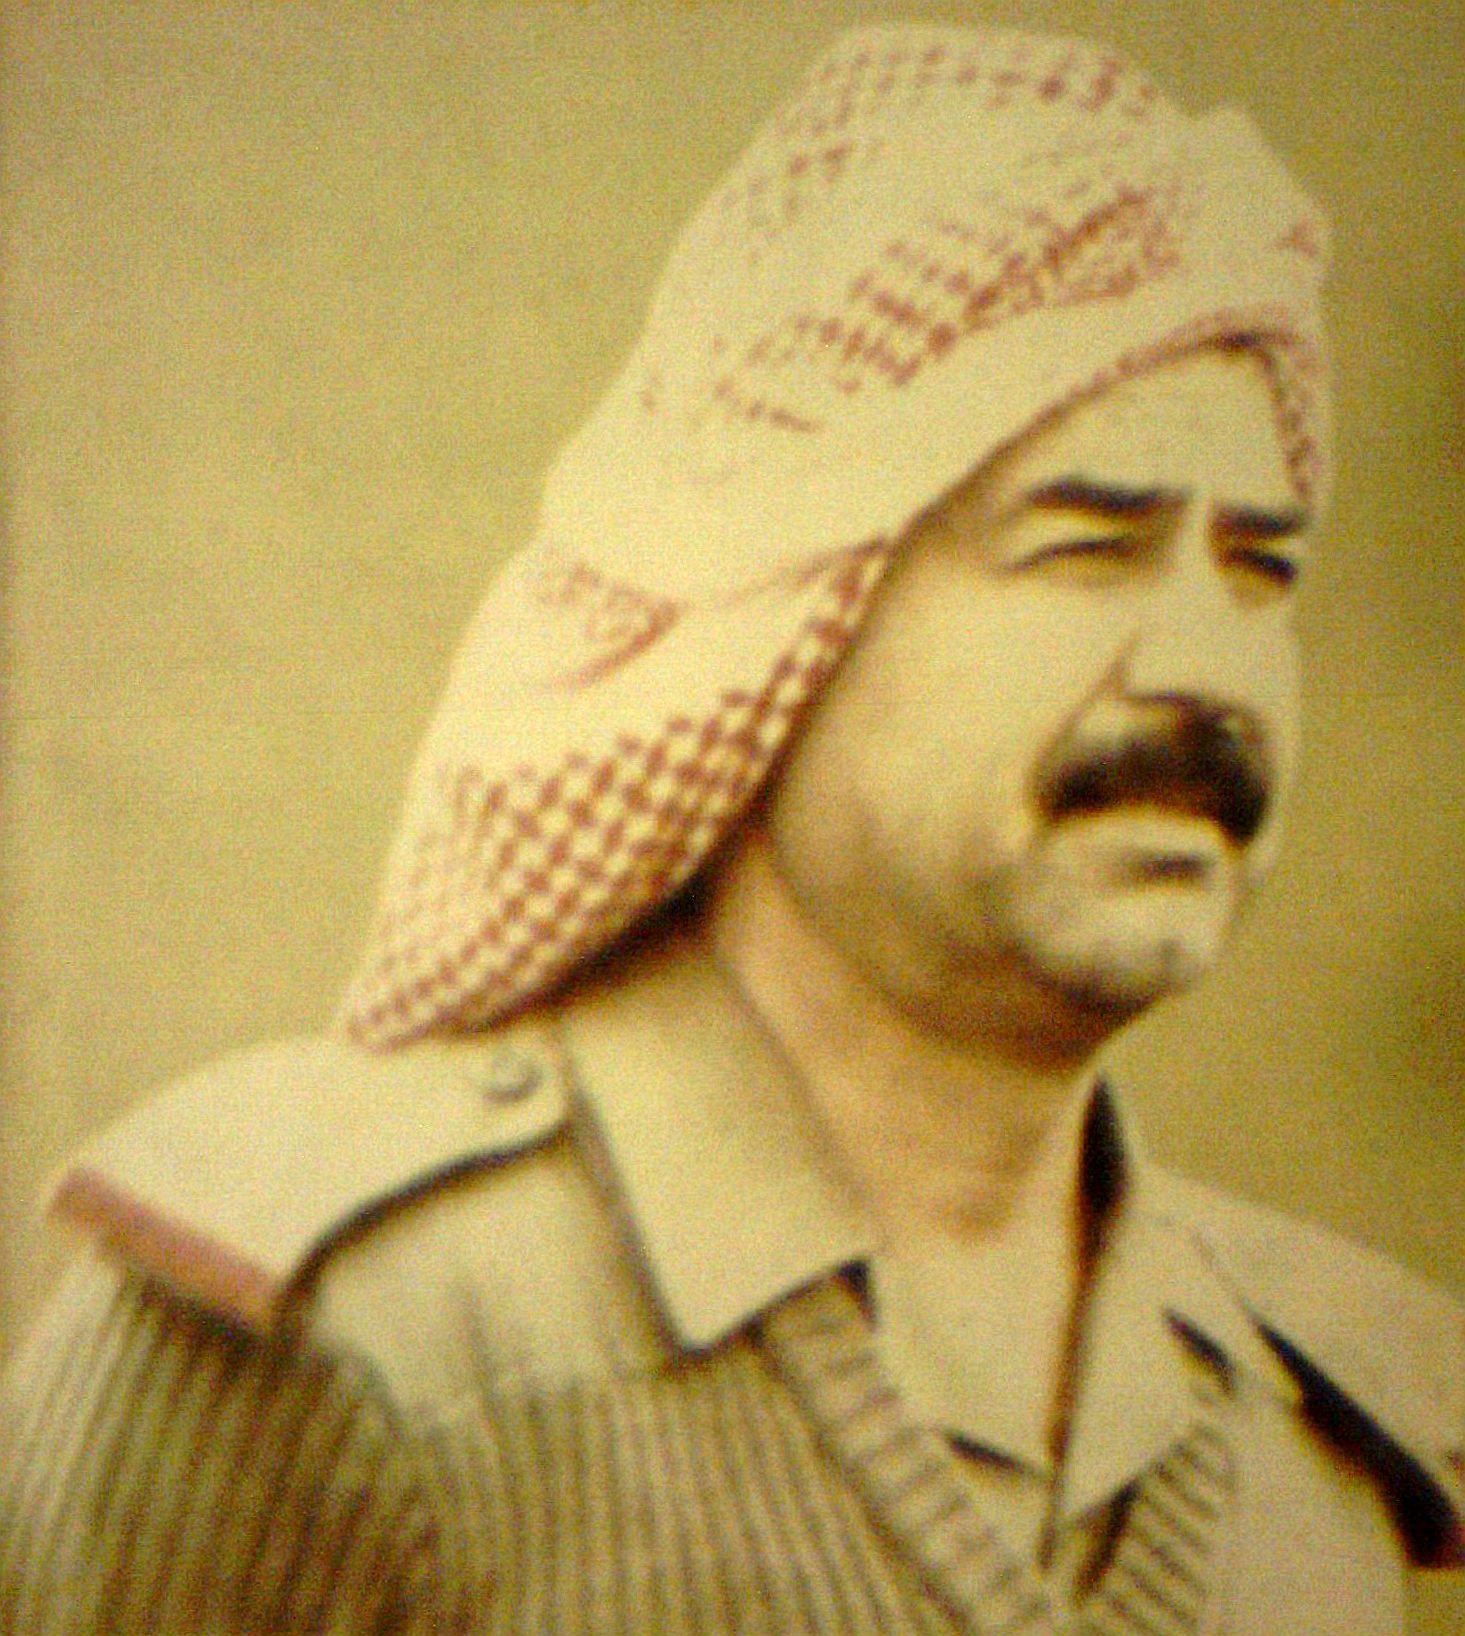 Wallpapers Sadam Hussen Saddam Hussein 403148.8 1465x1636